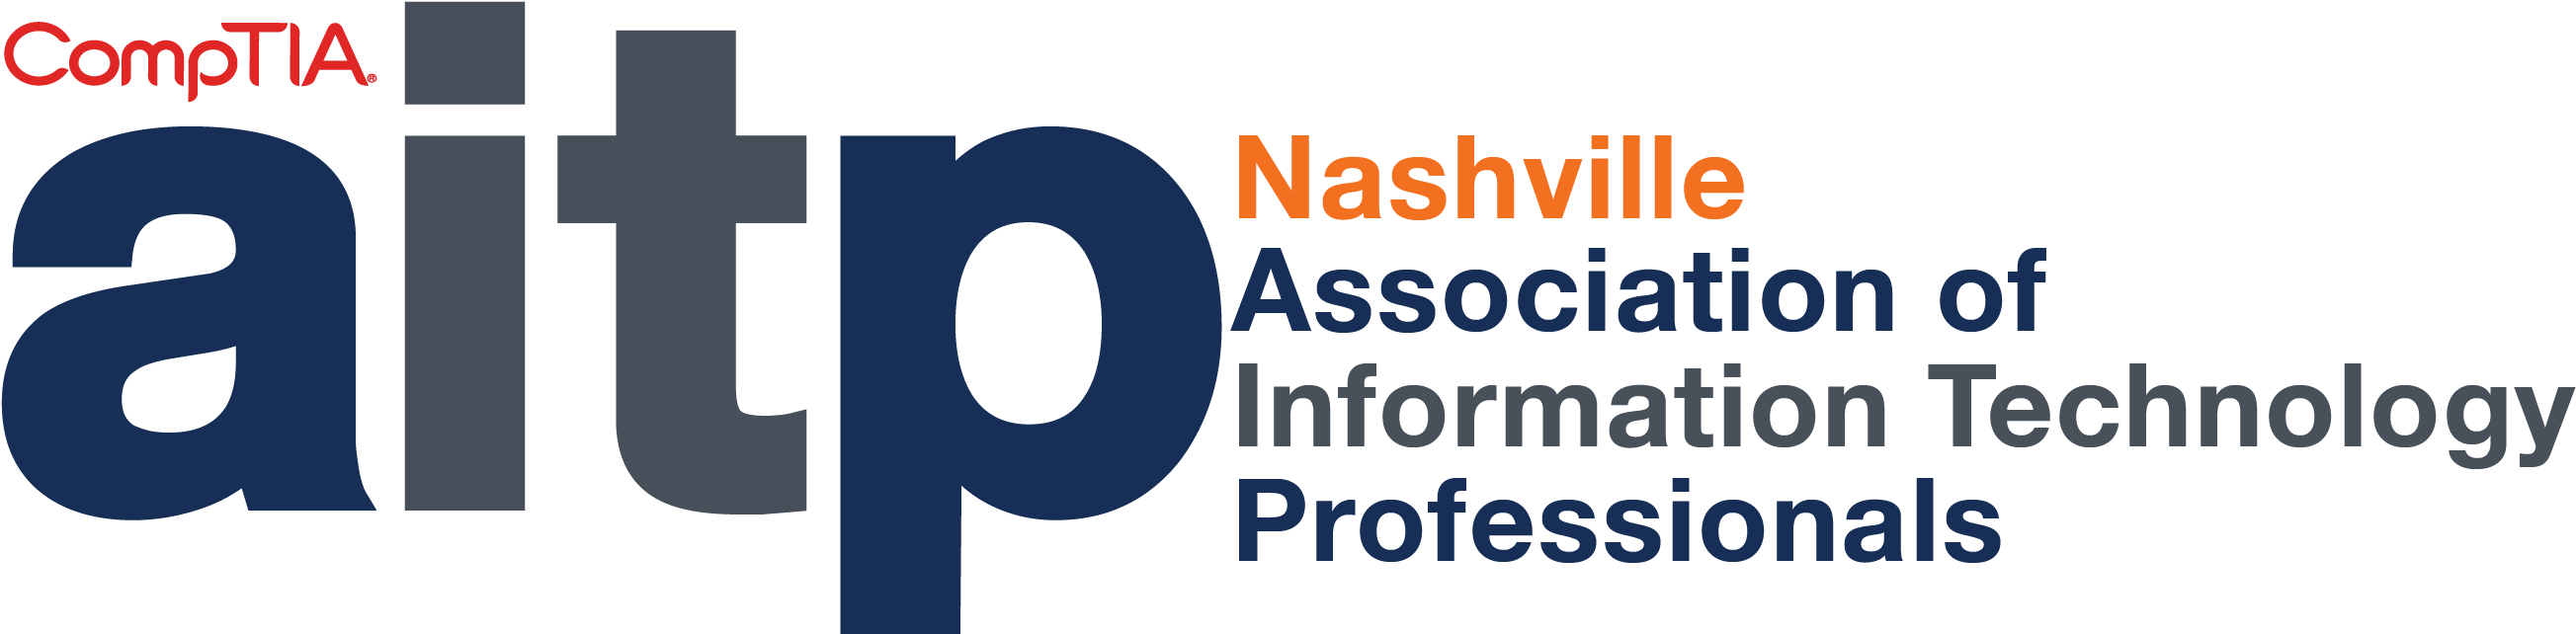 Aitp Logo - Association Of Information Technology Professionals (2700x800)